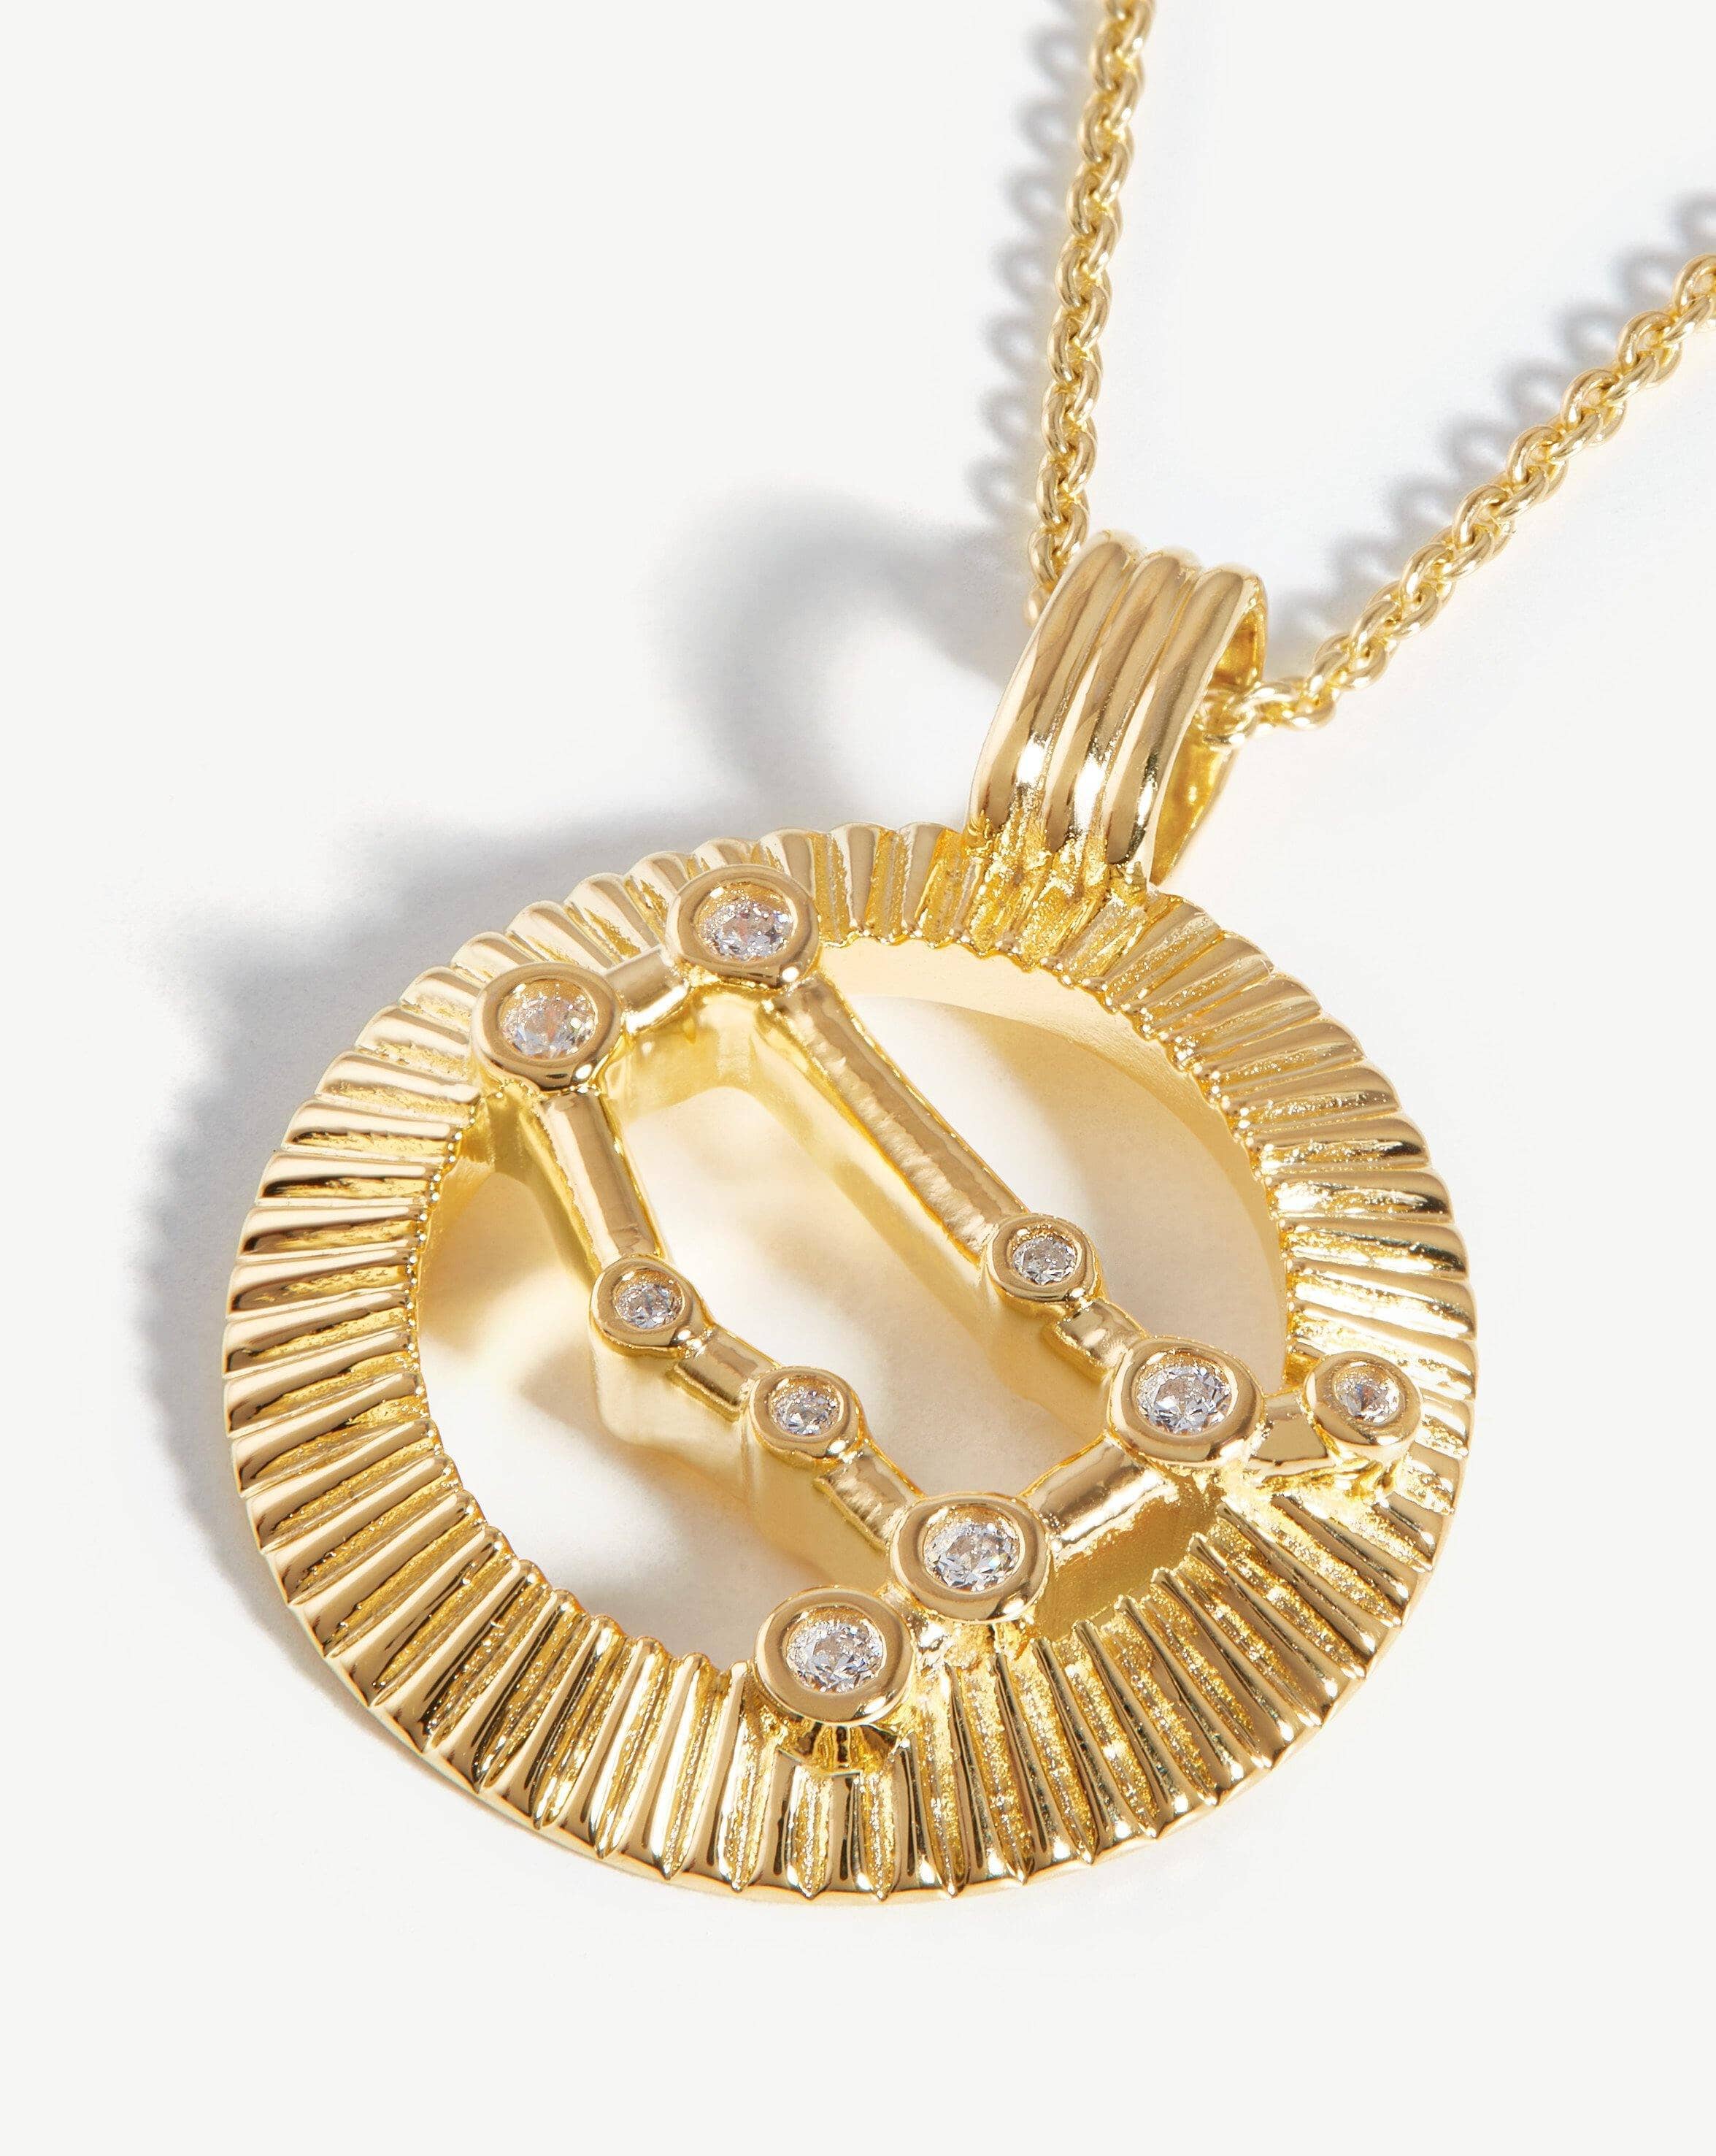 Zodiac Constellation Pendant Necklace - Gemini | 18ct Gold Plated Vermeil/Gemini Necklaces Missoma 